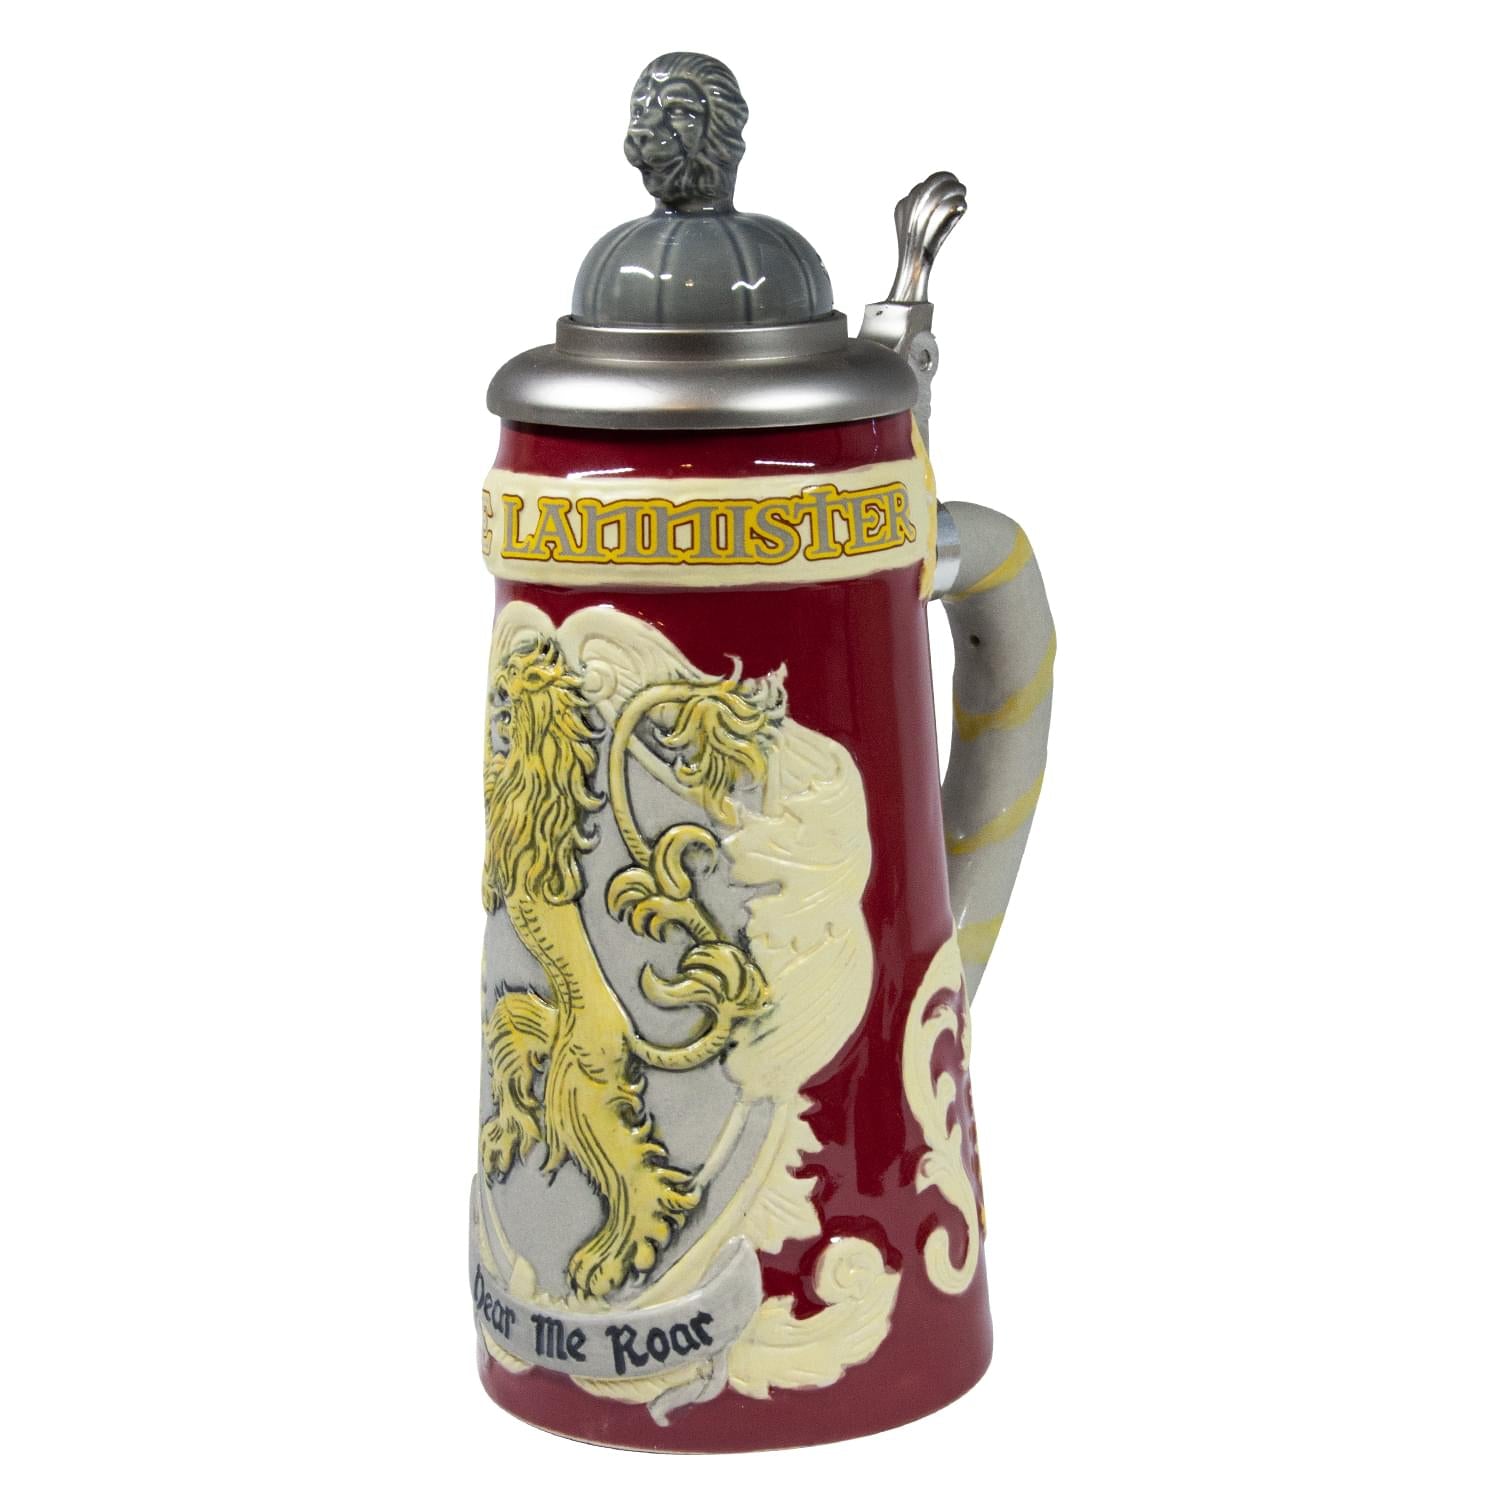 Game of Thrones House Lannister Beer Stein | Ceramic Drinking Mug | 22 Oz.